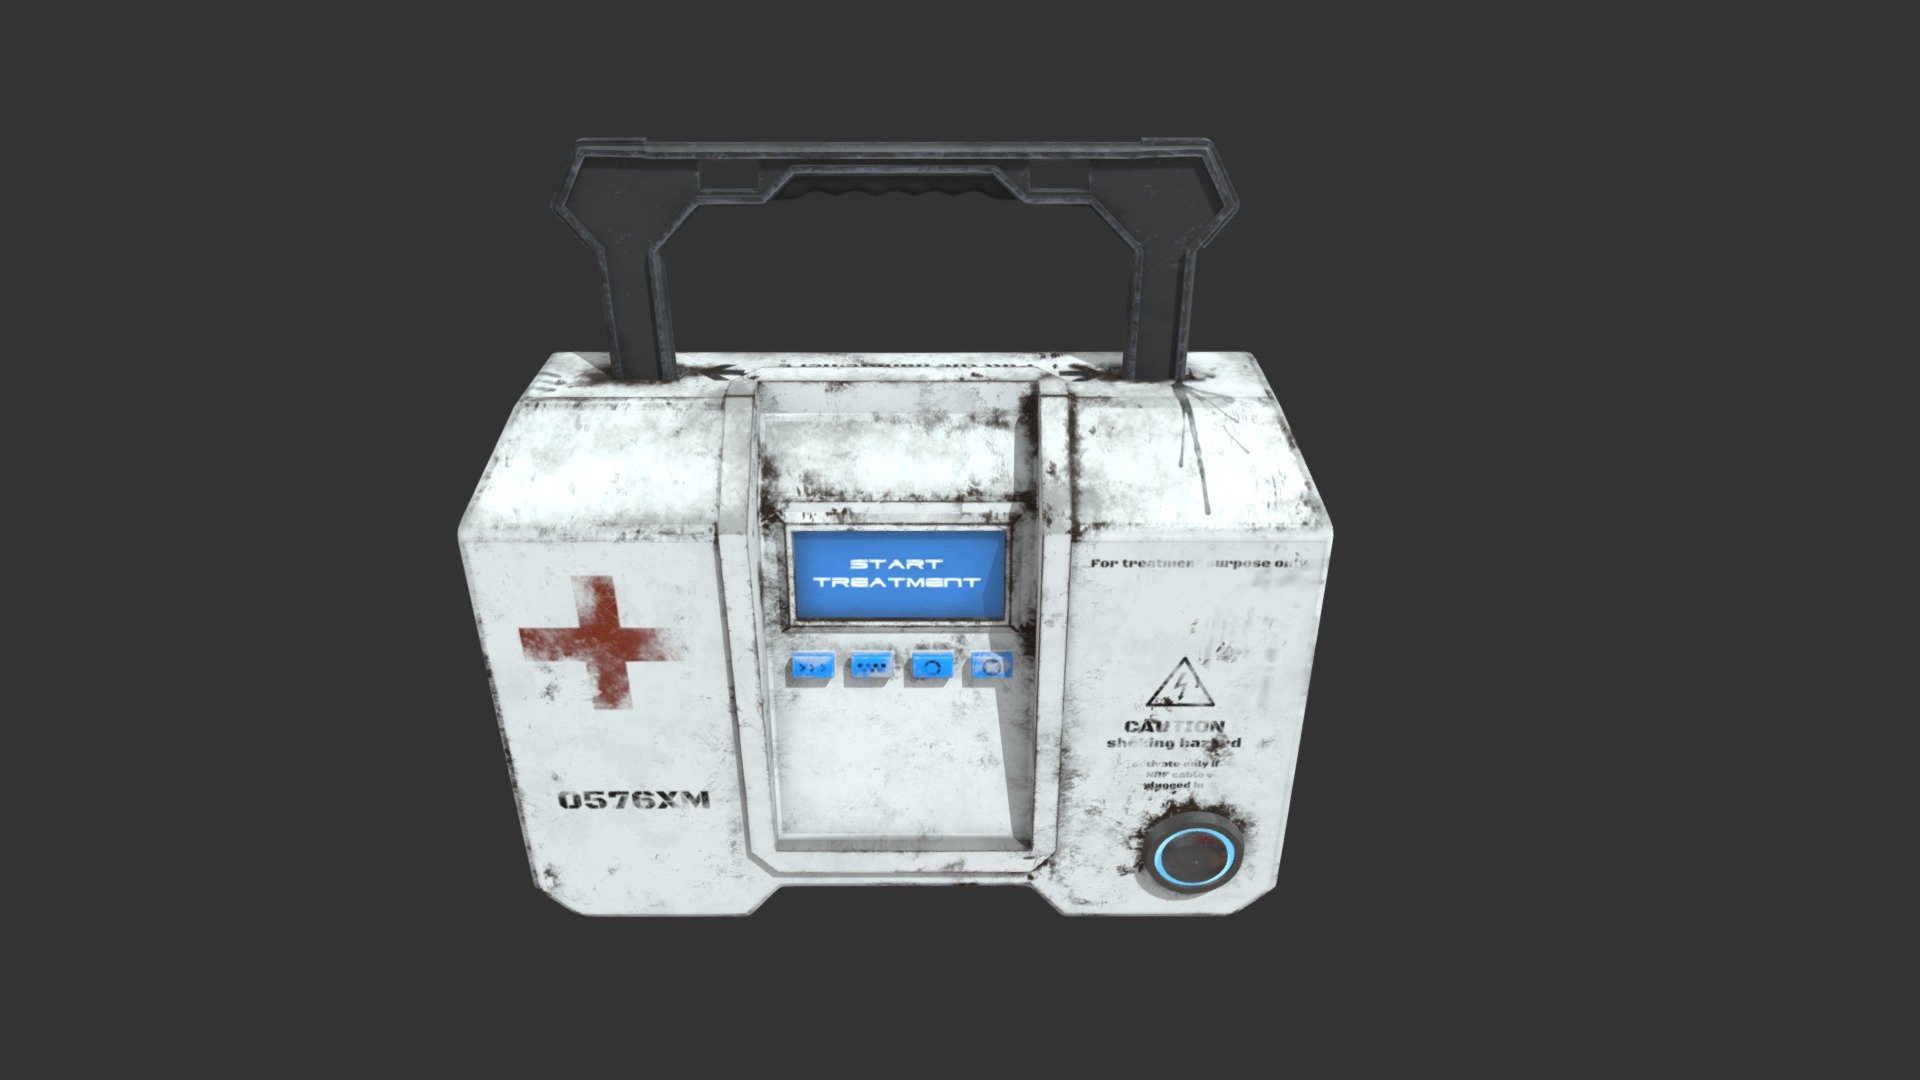 Sci-fi portable medkit